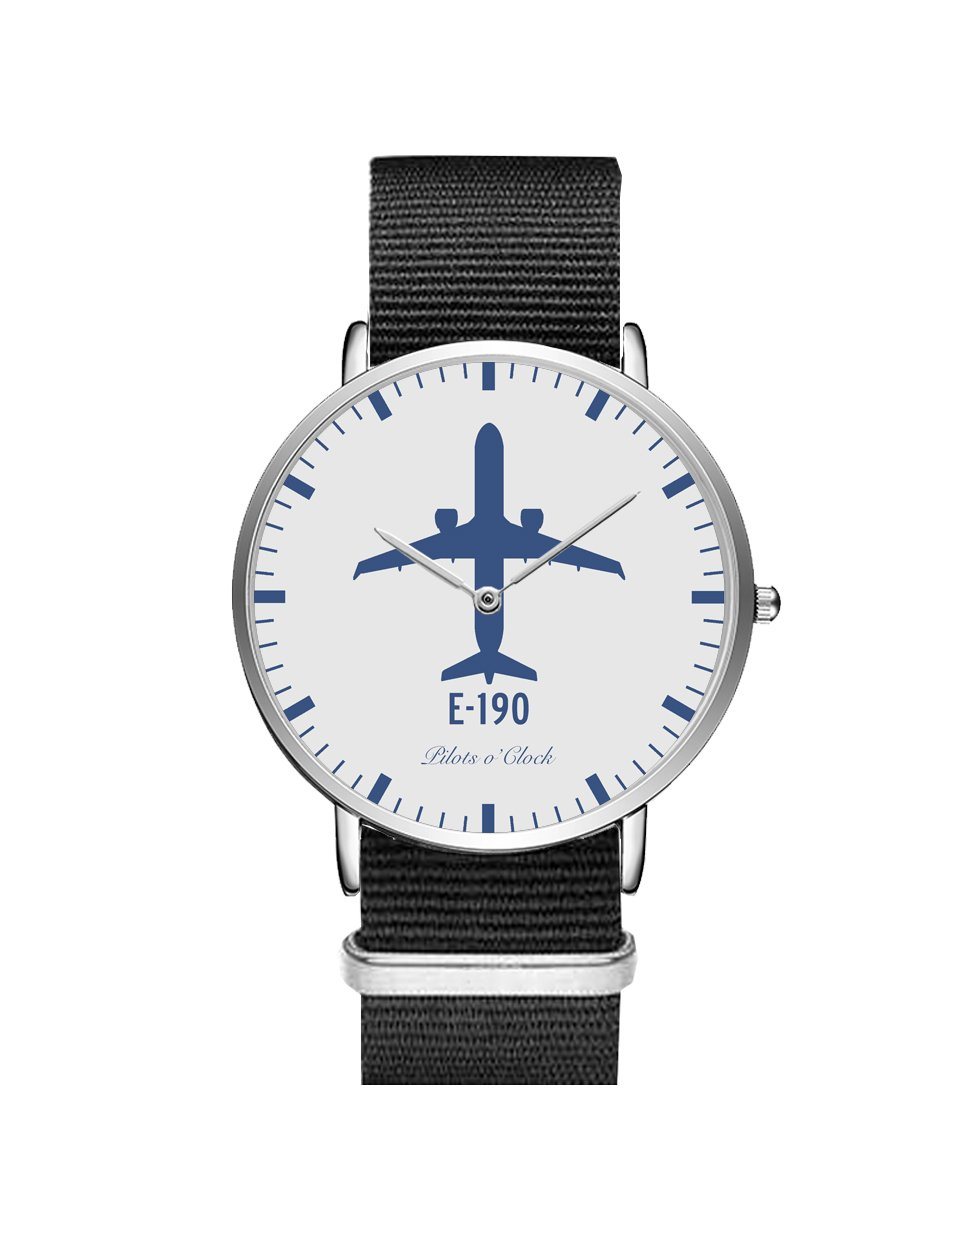 Embraer E190 Leather Strap Watches Pilot Eyes Store Silver & Black Nylon Strap 